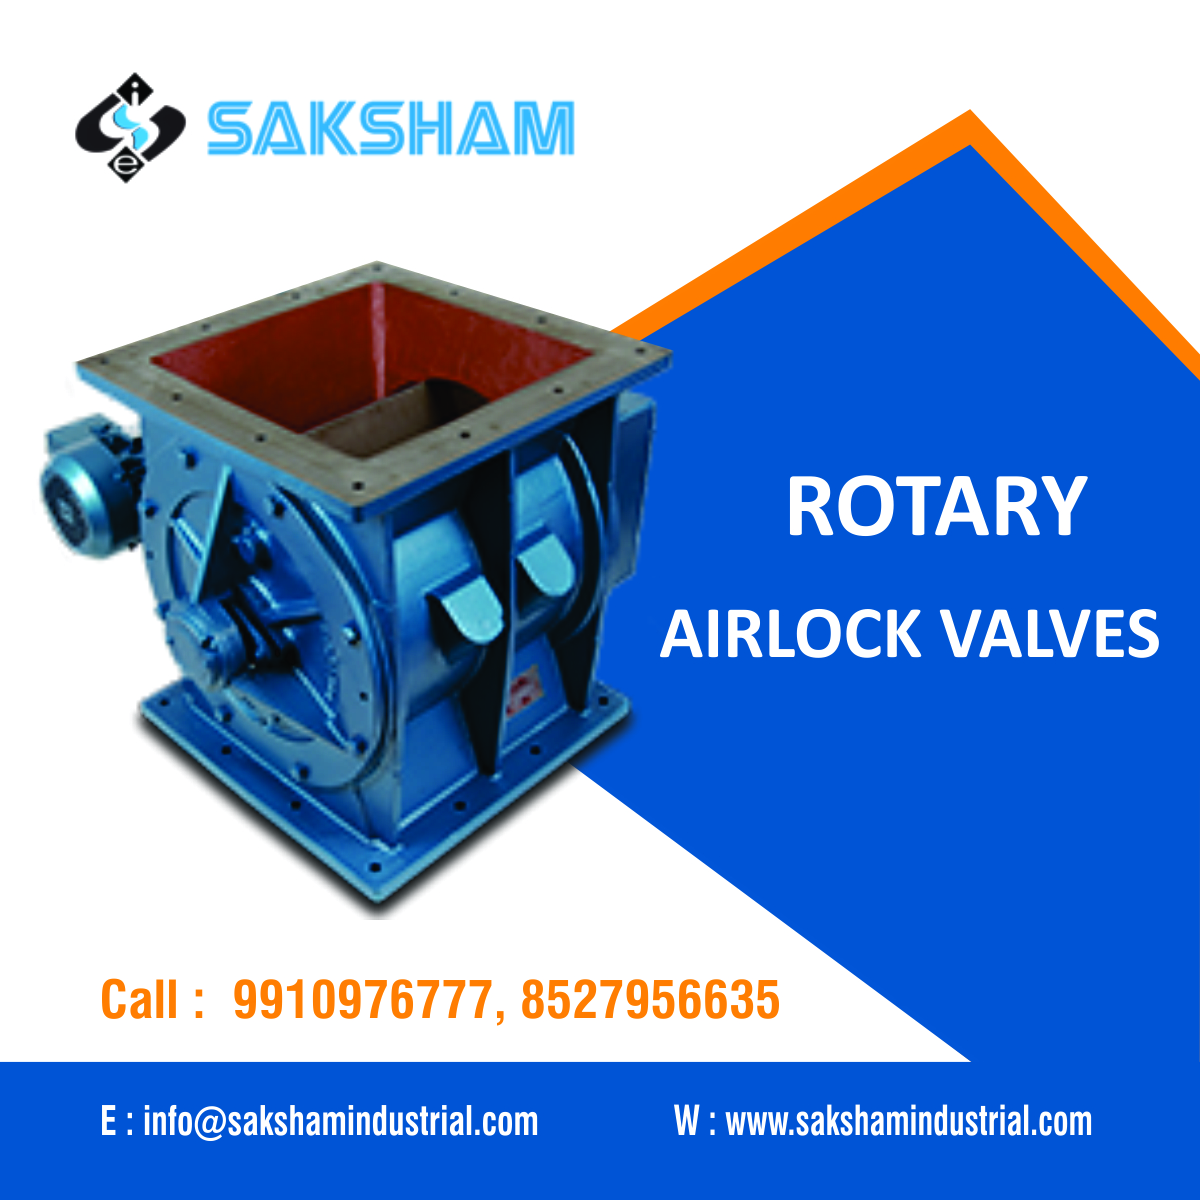 Rotary Airlock Valves: Saksham Industrial Engineers